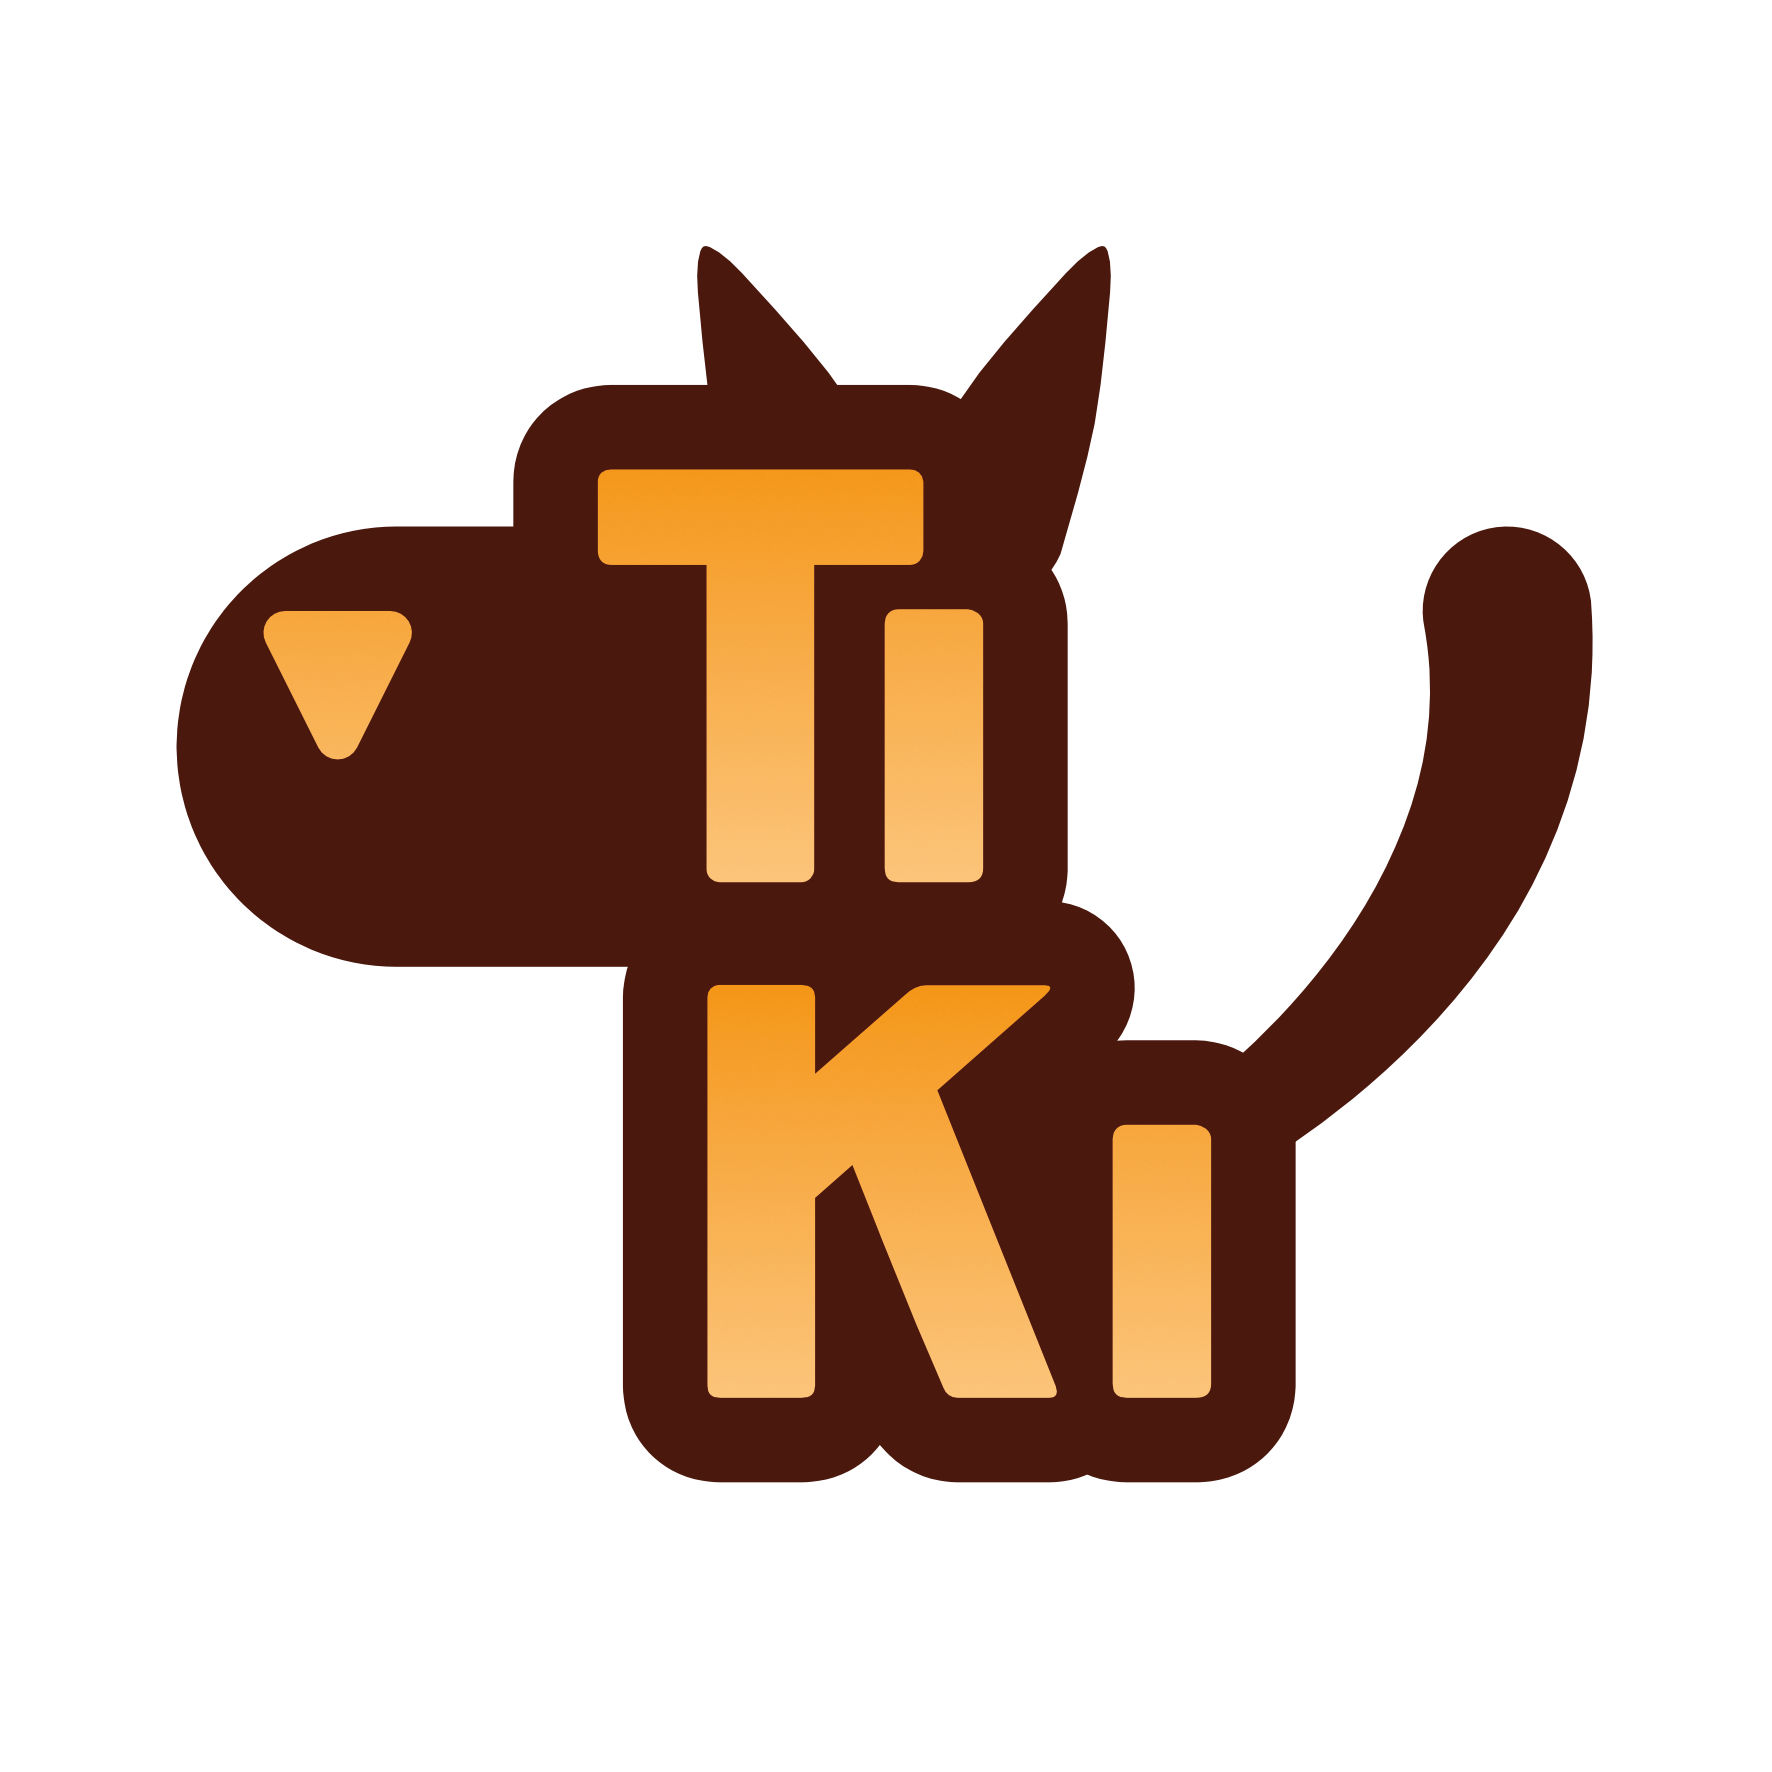 Tiki logo